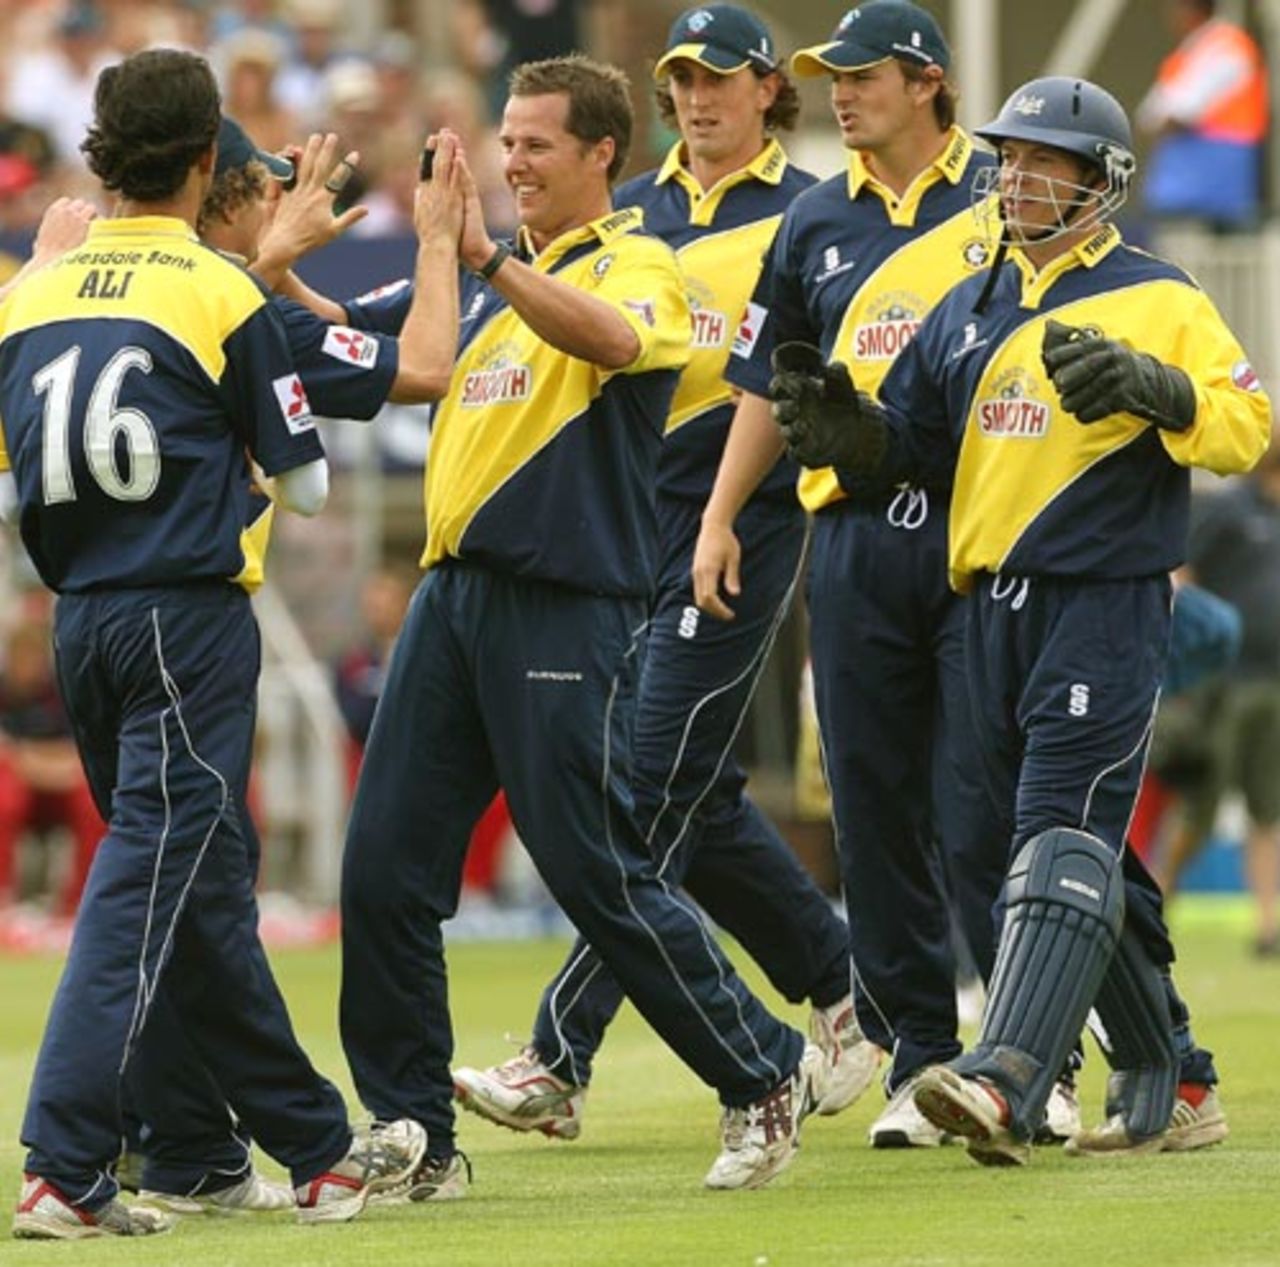 Mark Hardinges and his team-mates celebrate the wicket of Mark Chilton, Gloucestershire v Lancashire, Twenty20 Cup, 1st semi-final, Edgbaston, August 4, 2007 